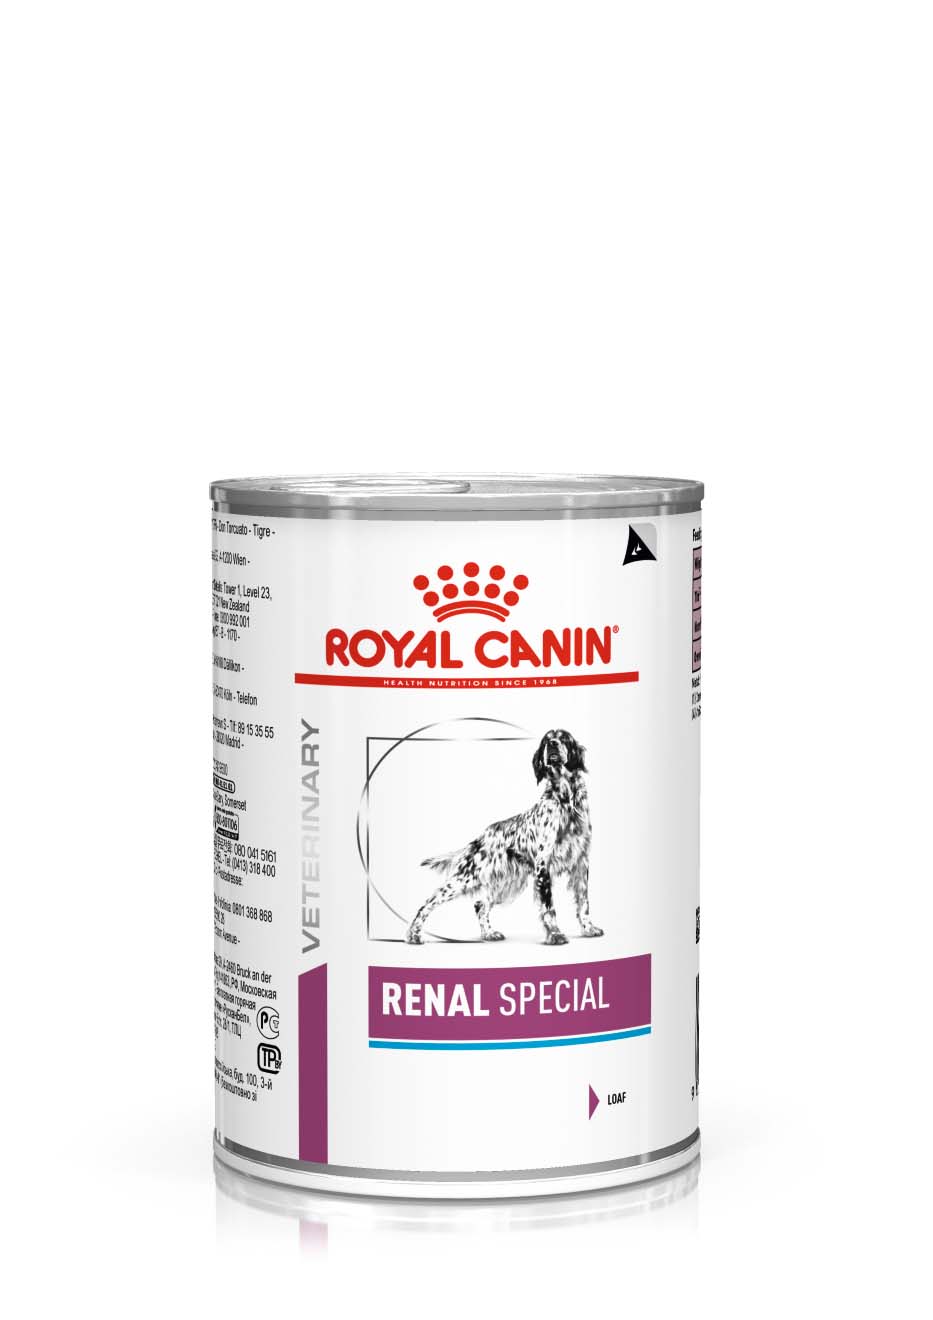 Royal Canin Renal Special Hond - blik 12x410g